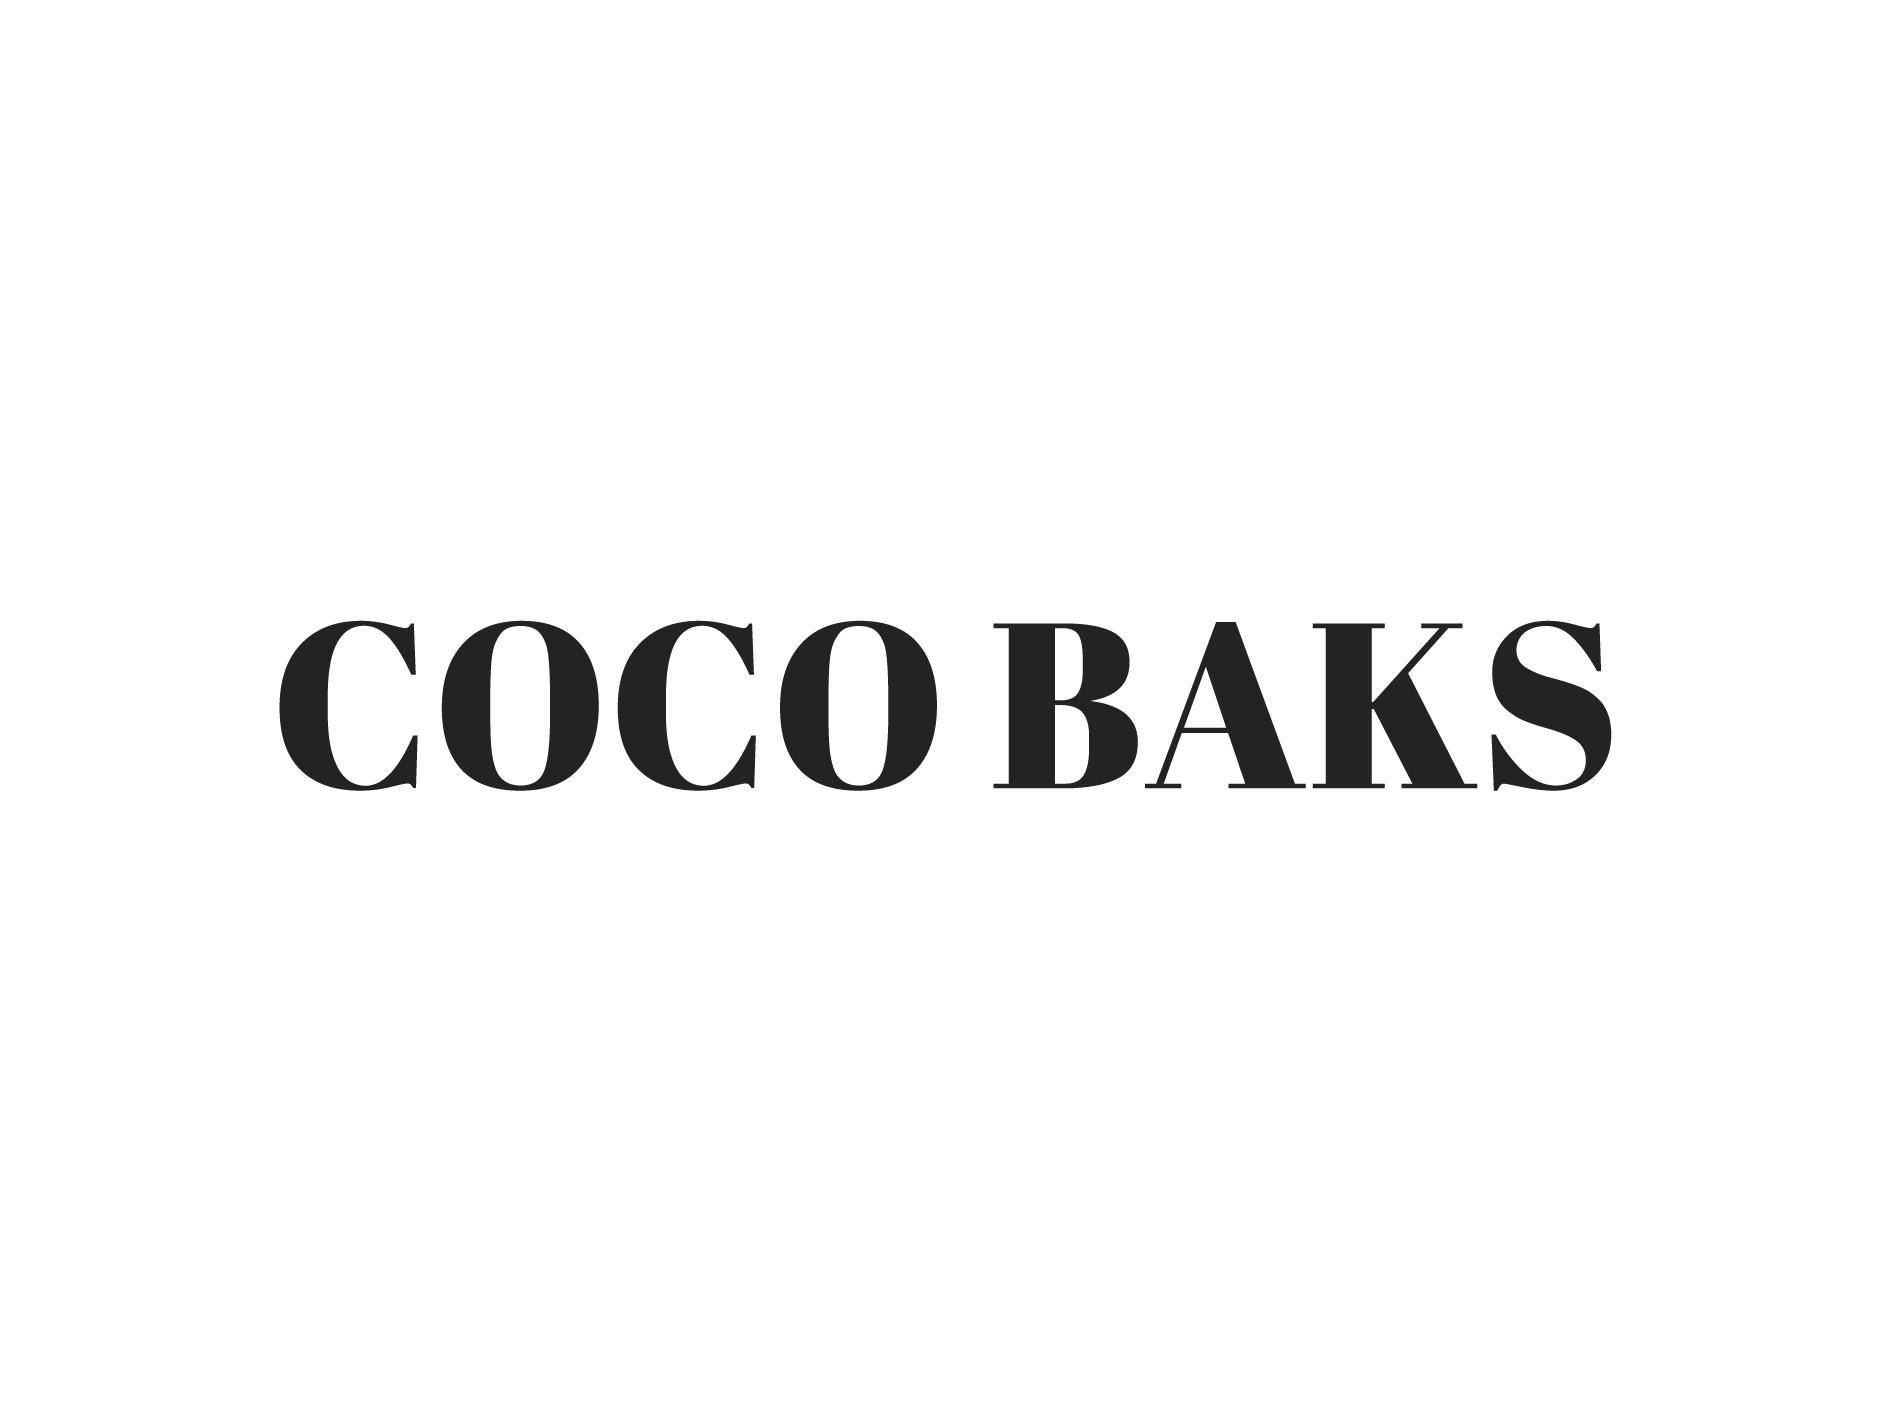 COCO BAKS